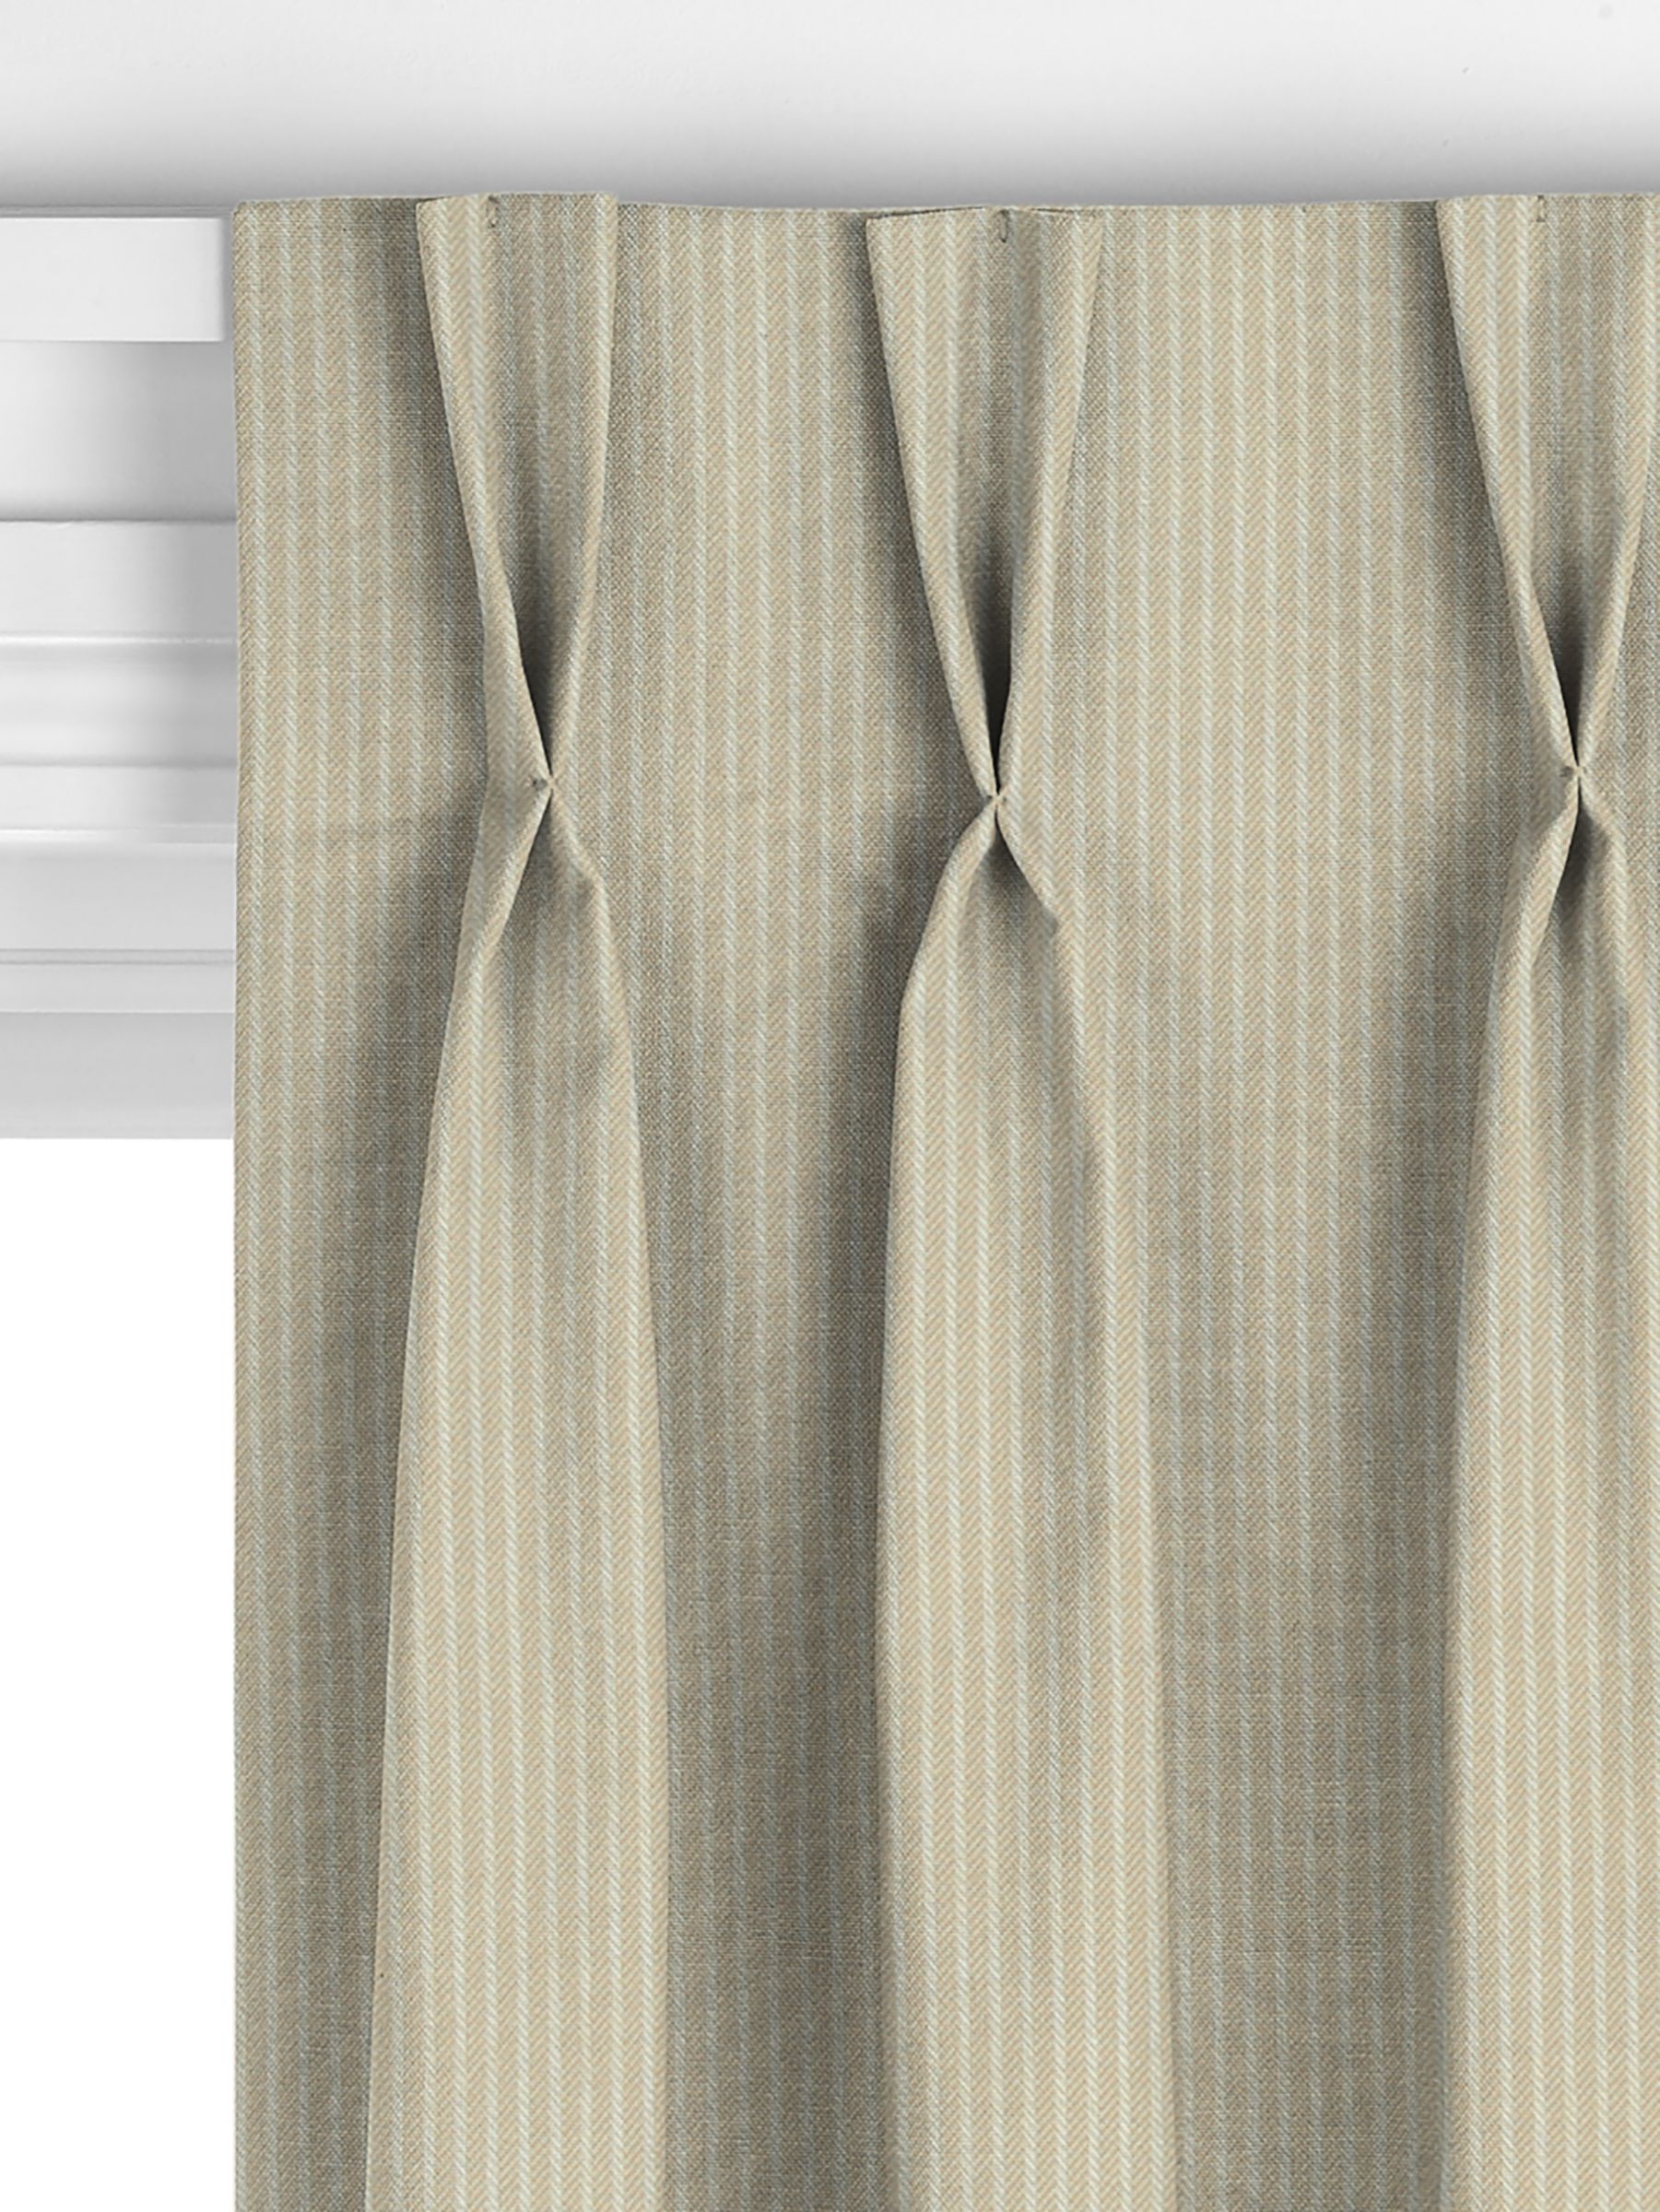 John Lewis Cotton Herringbone Stripe Made to Measure Curtains, Butter